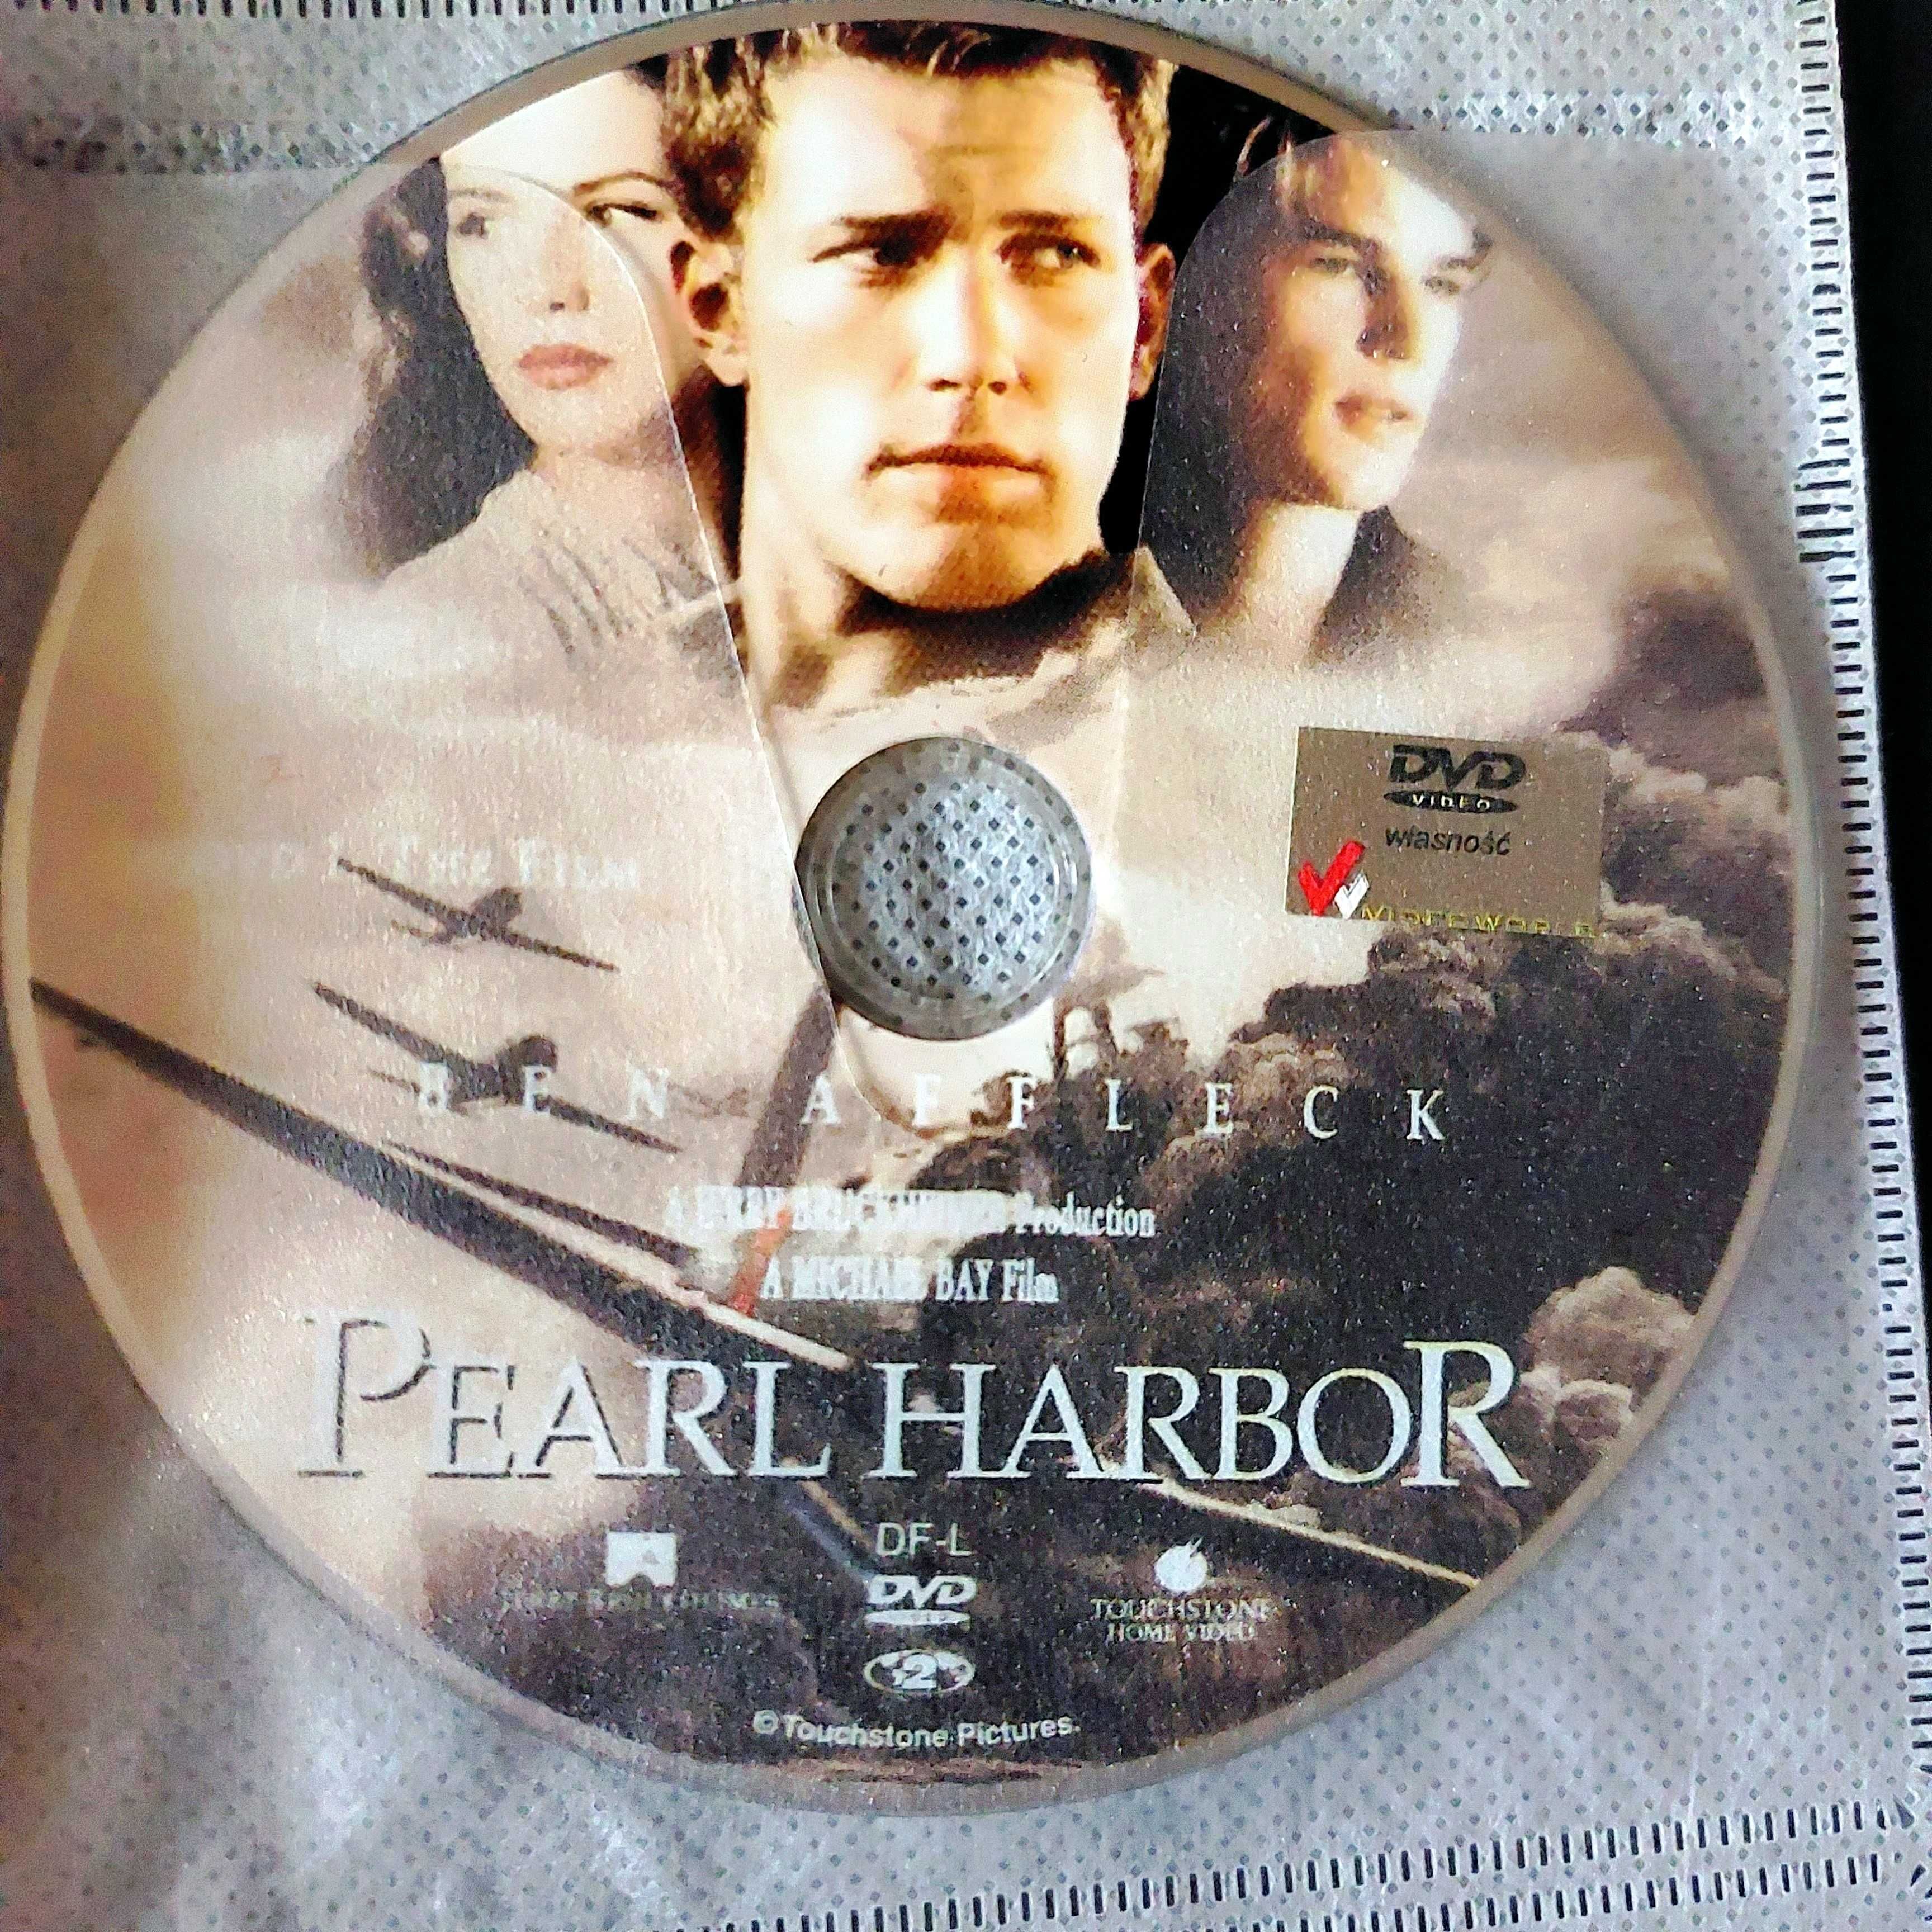 PEARL HARBOR | film wojenny na DVD